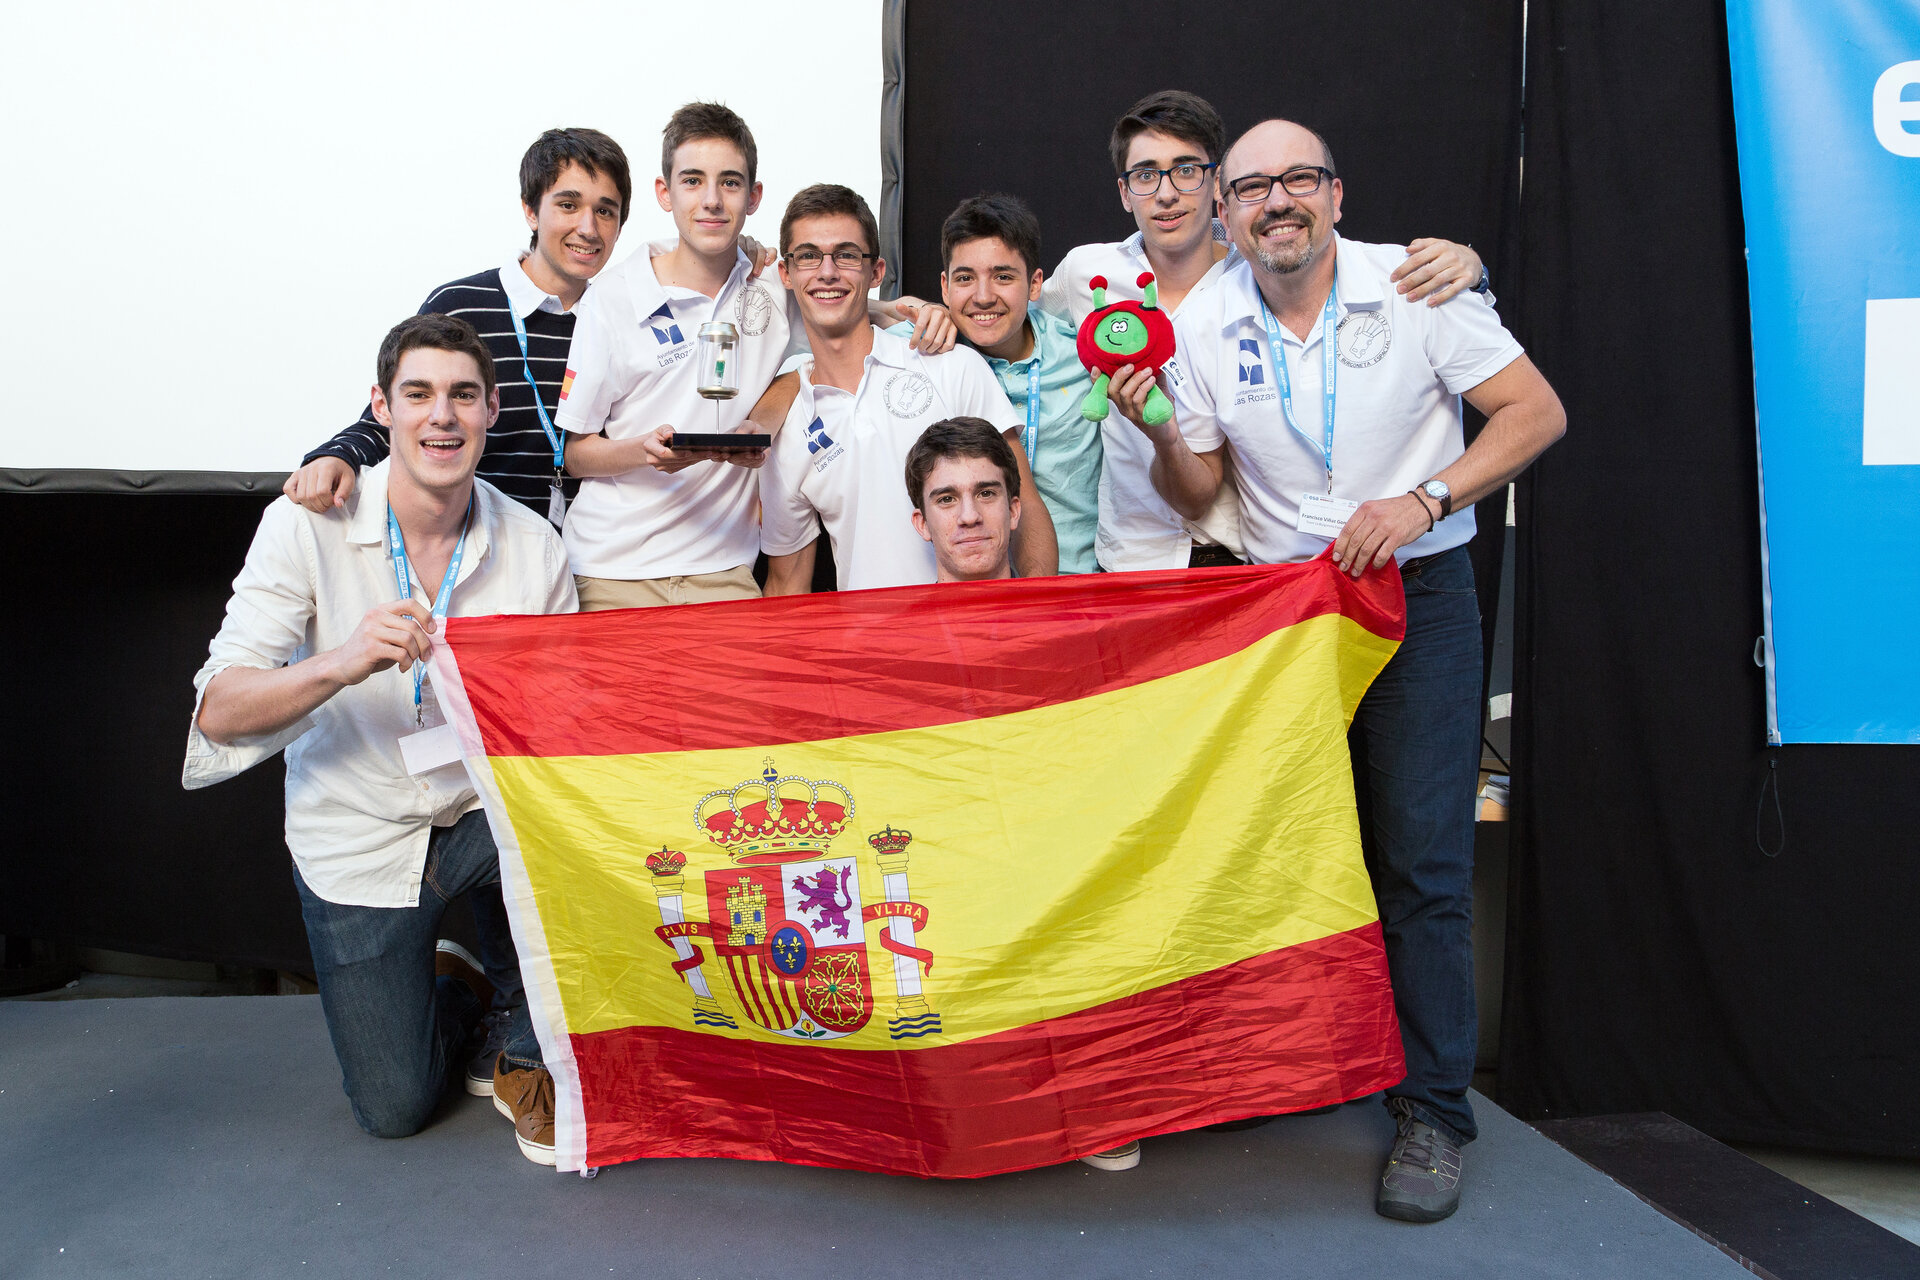 Team La Burgoneta Espacial from Spain